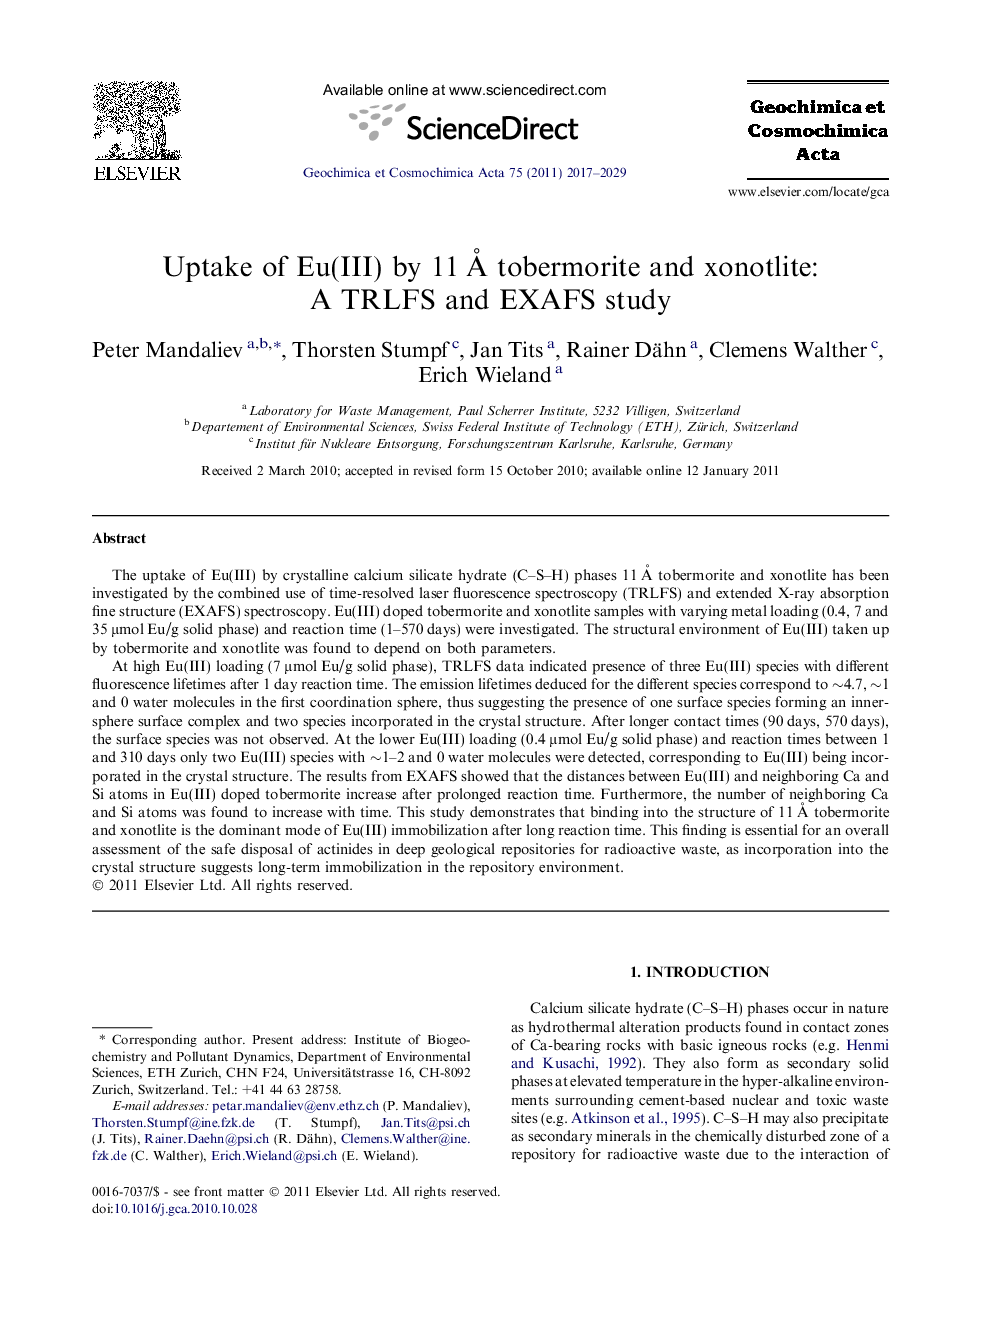 جذب Eu (III) توسط 11 Å Tobermorite و Xonotlite: مطالعه TRLFS و EXAFS